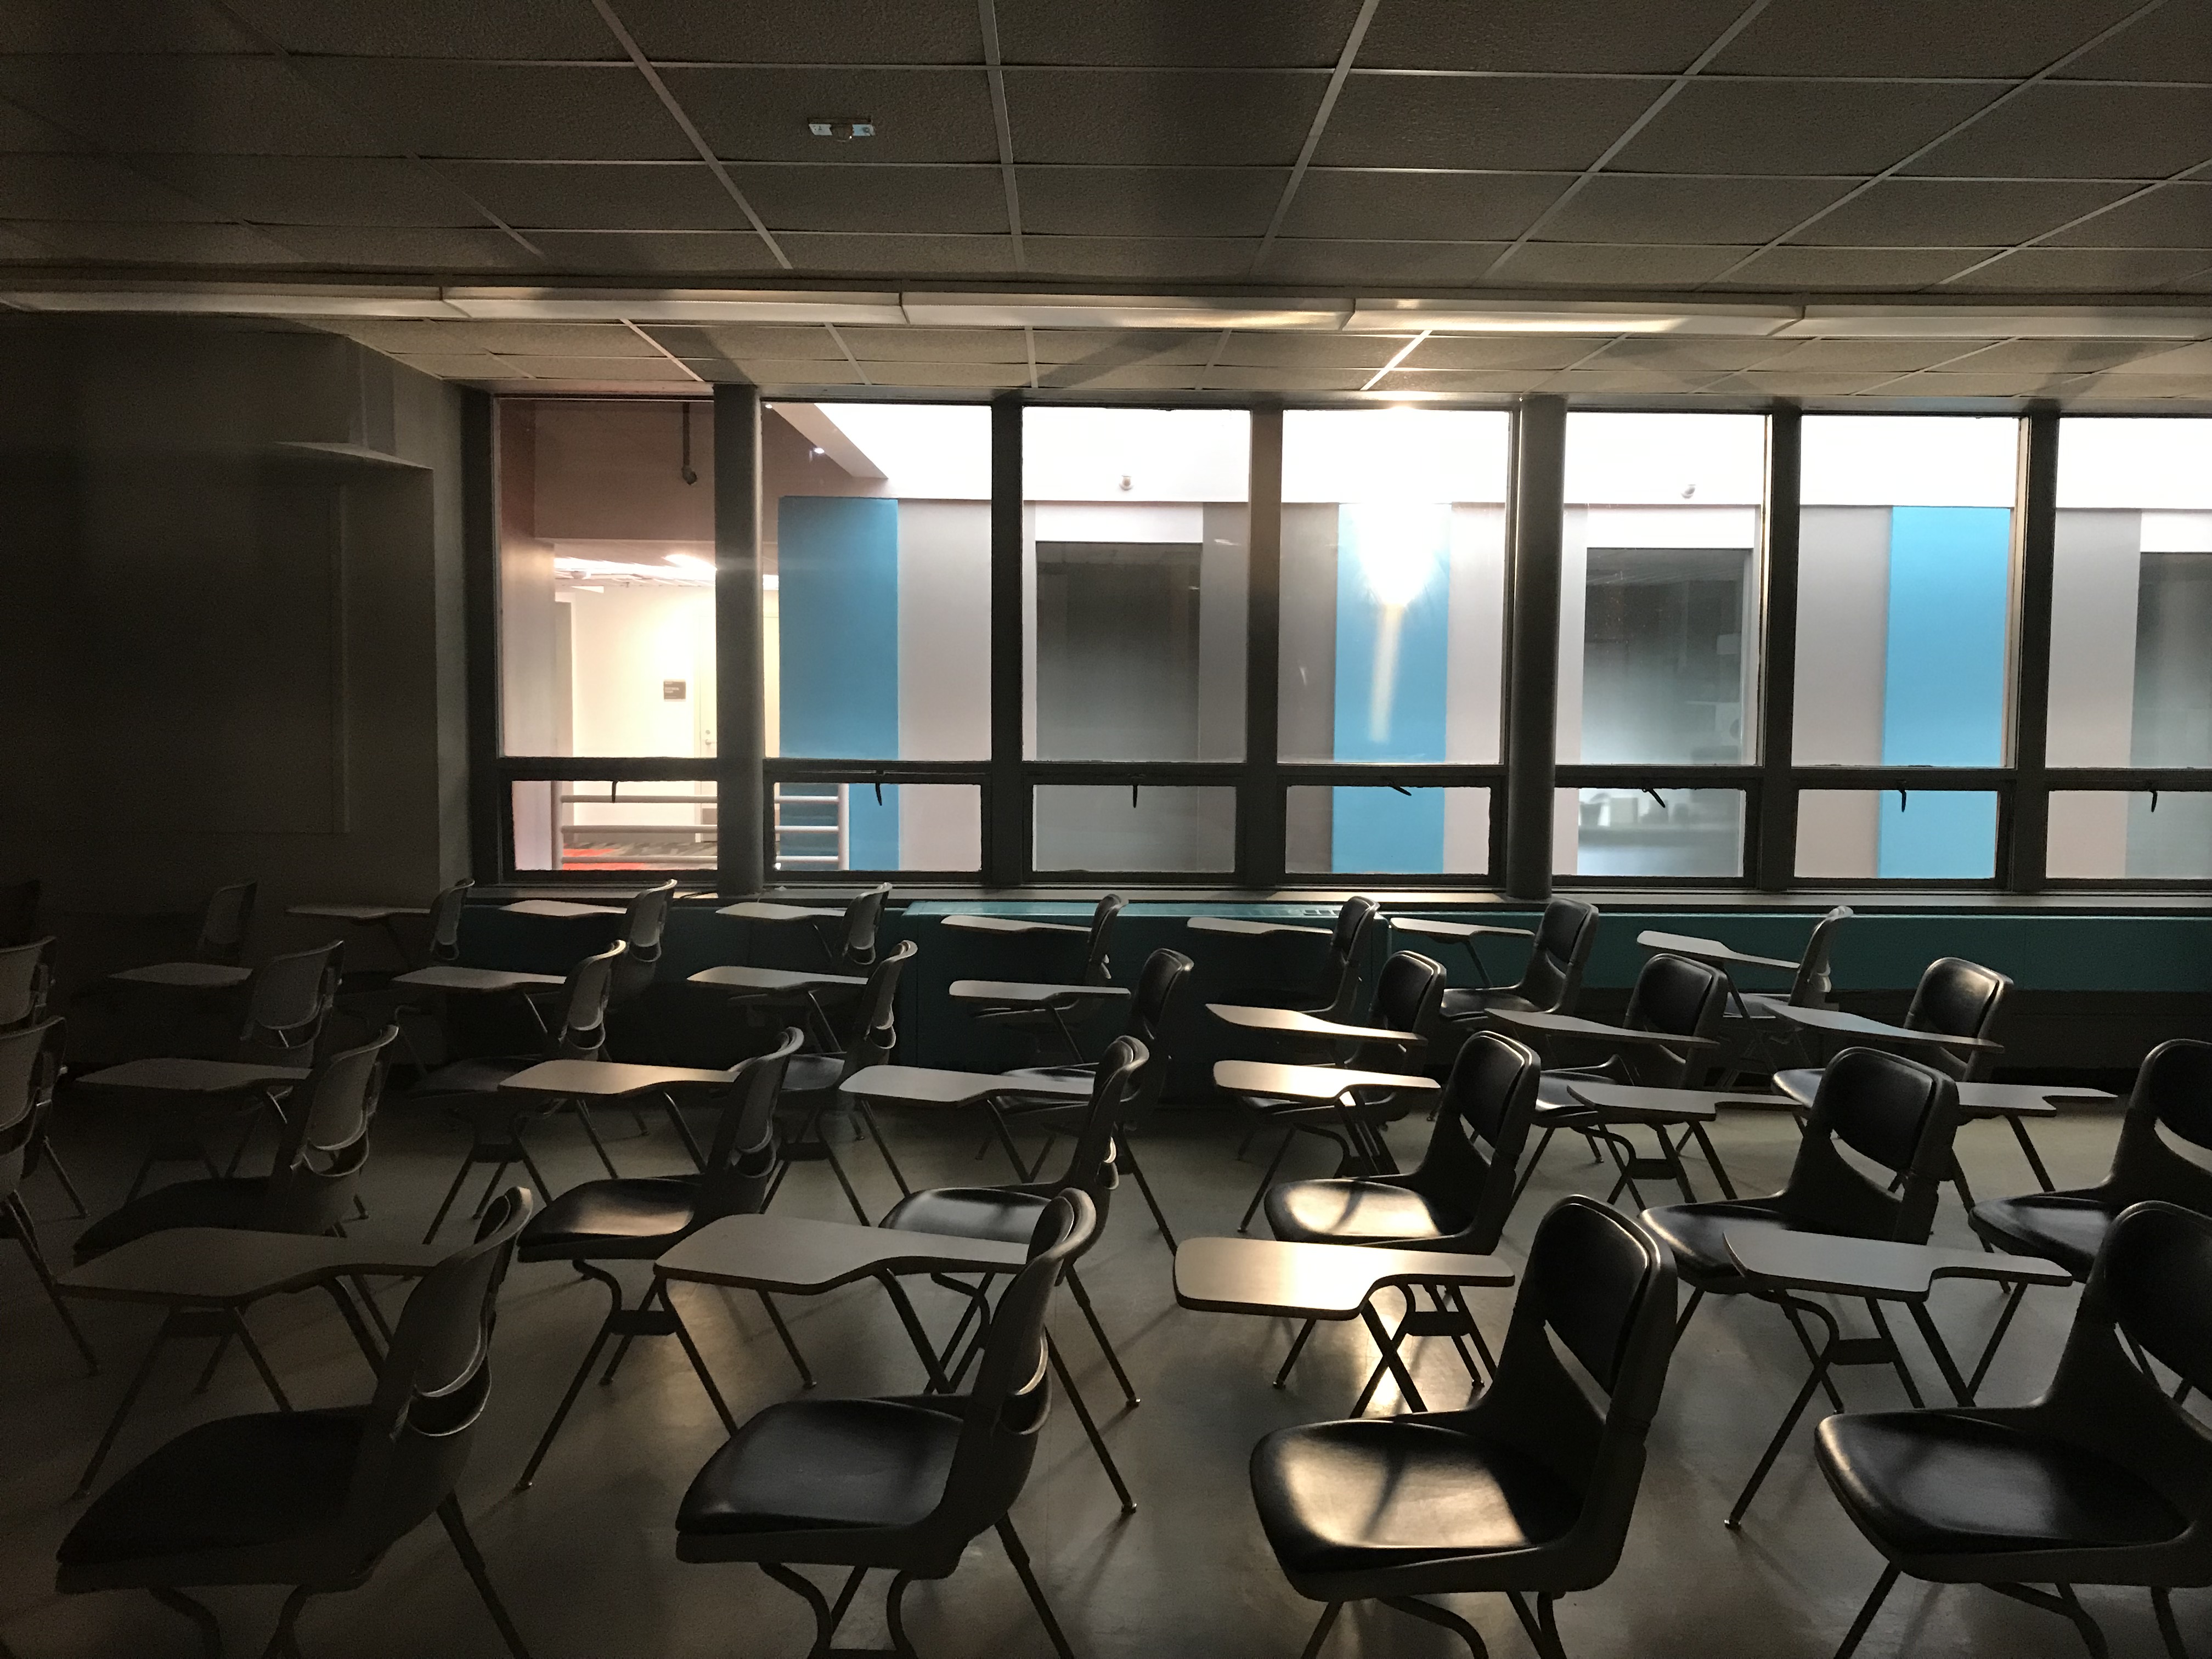 An unlit empty classroom filled with desks.